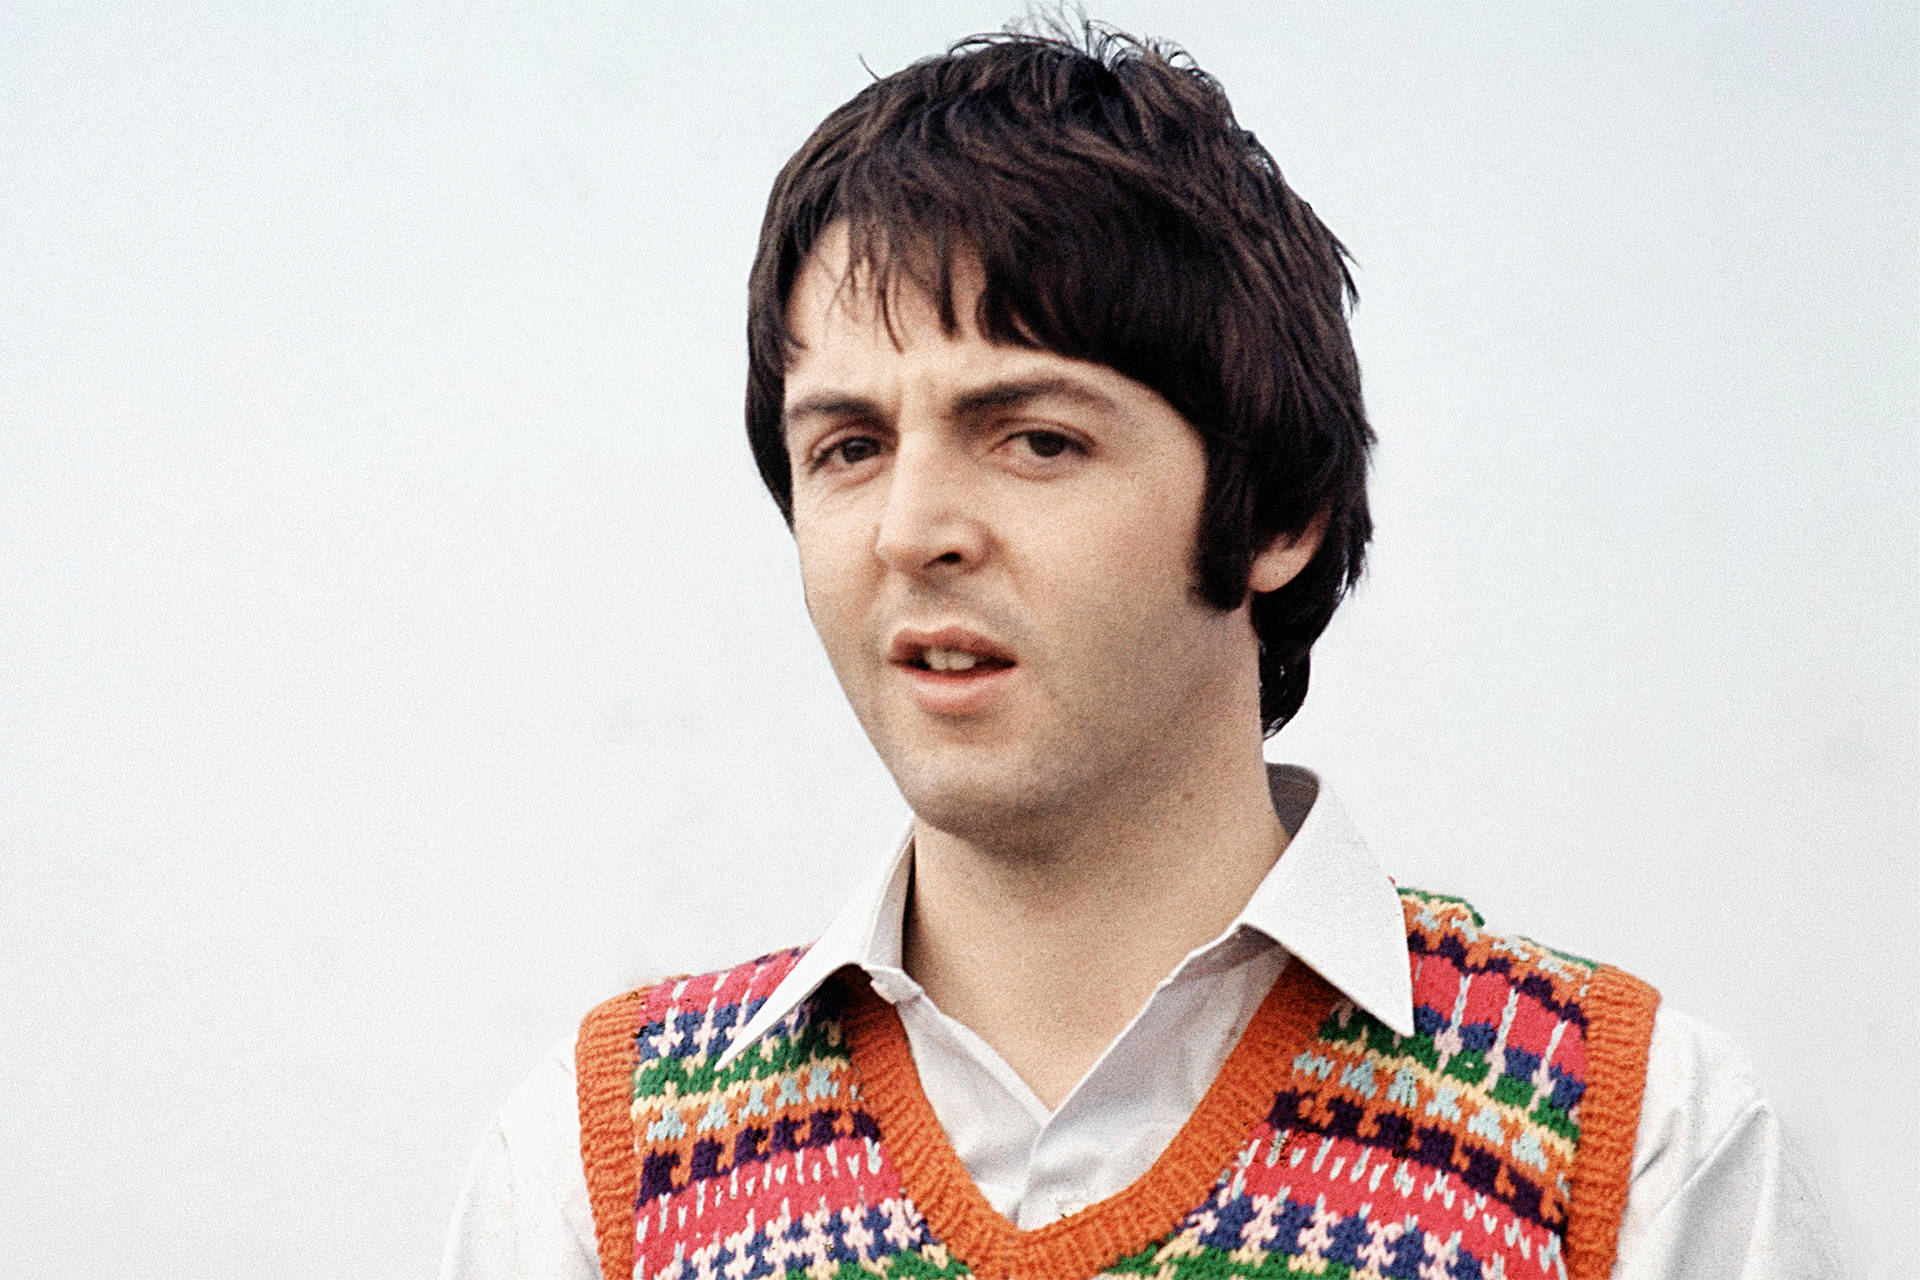 Paul McCartney Orange Vest Wallpaper